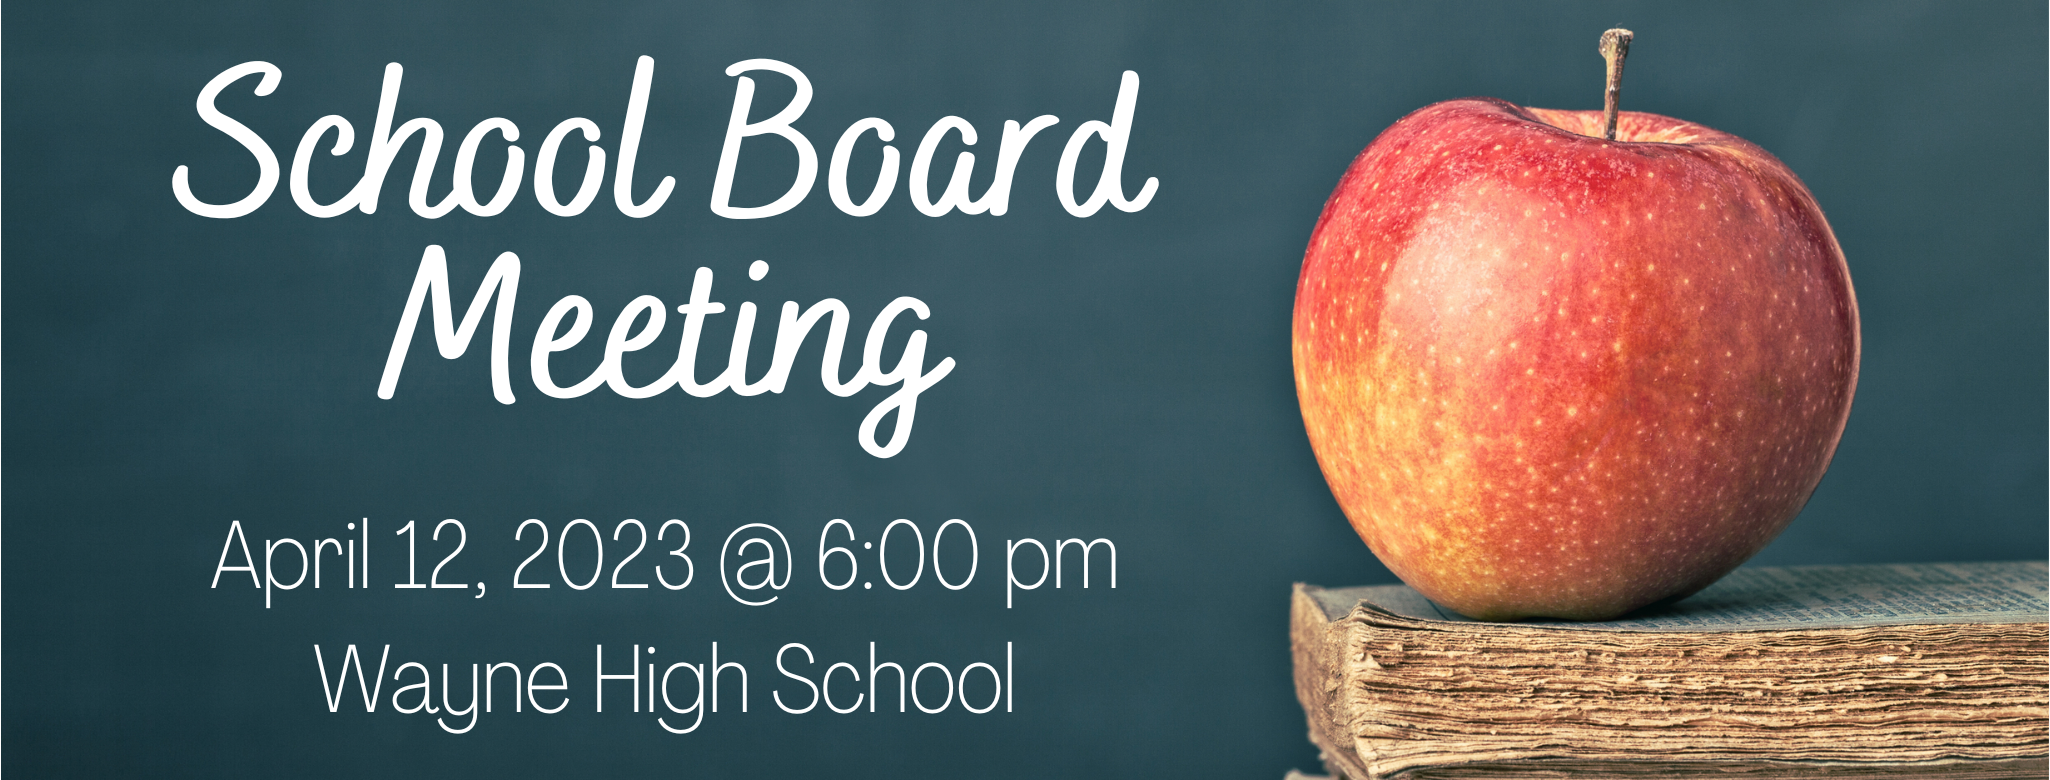 School Board Meeting 8